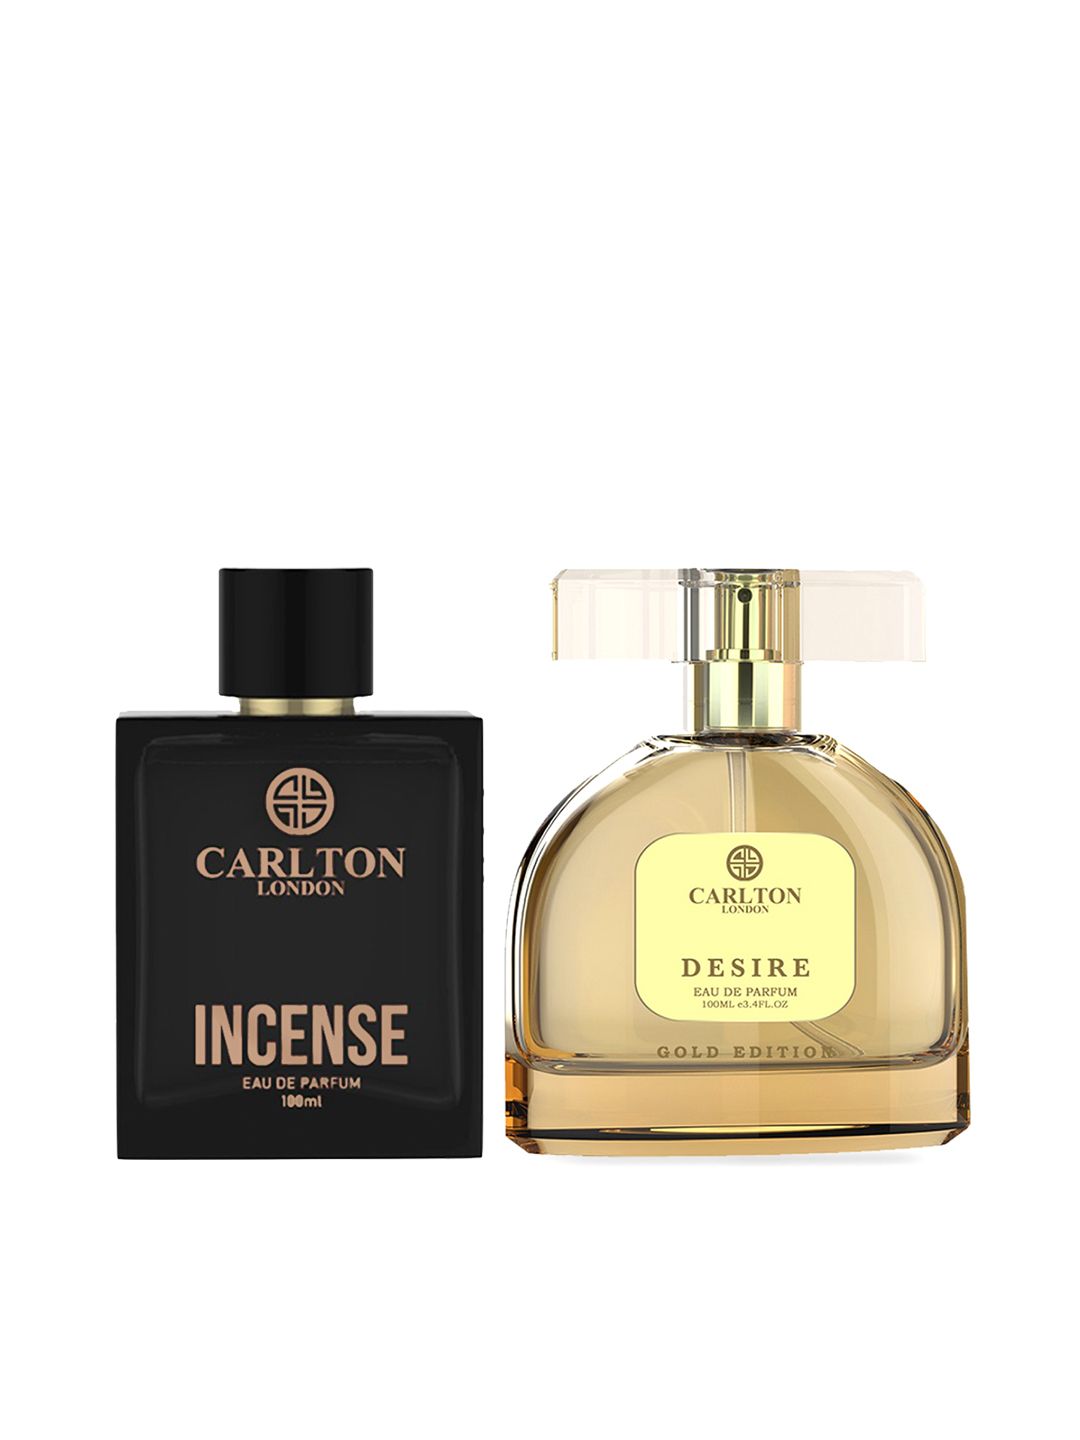 Carlton London Set of Men & Women Eau de Parfums - Incense & Desire - 100ml each Price in India